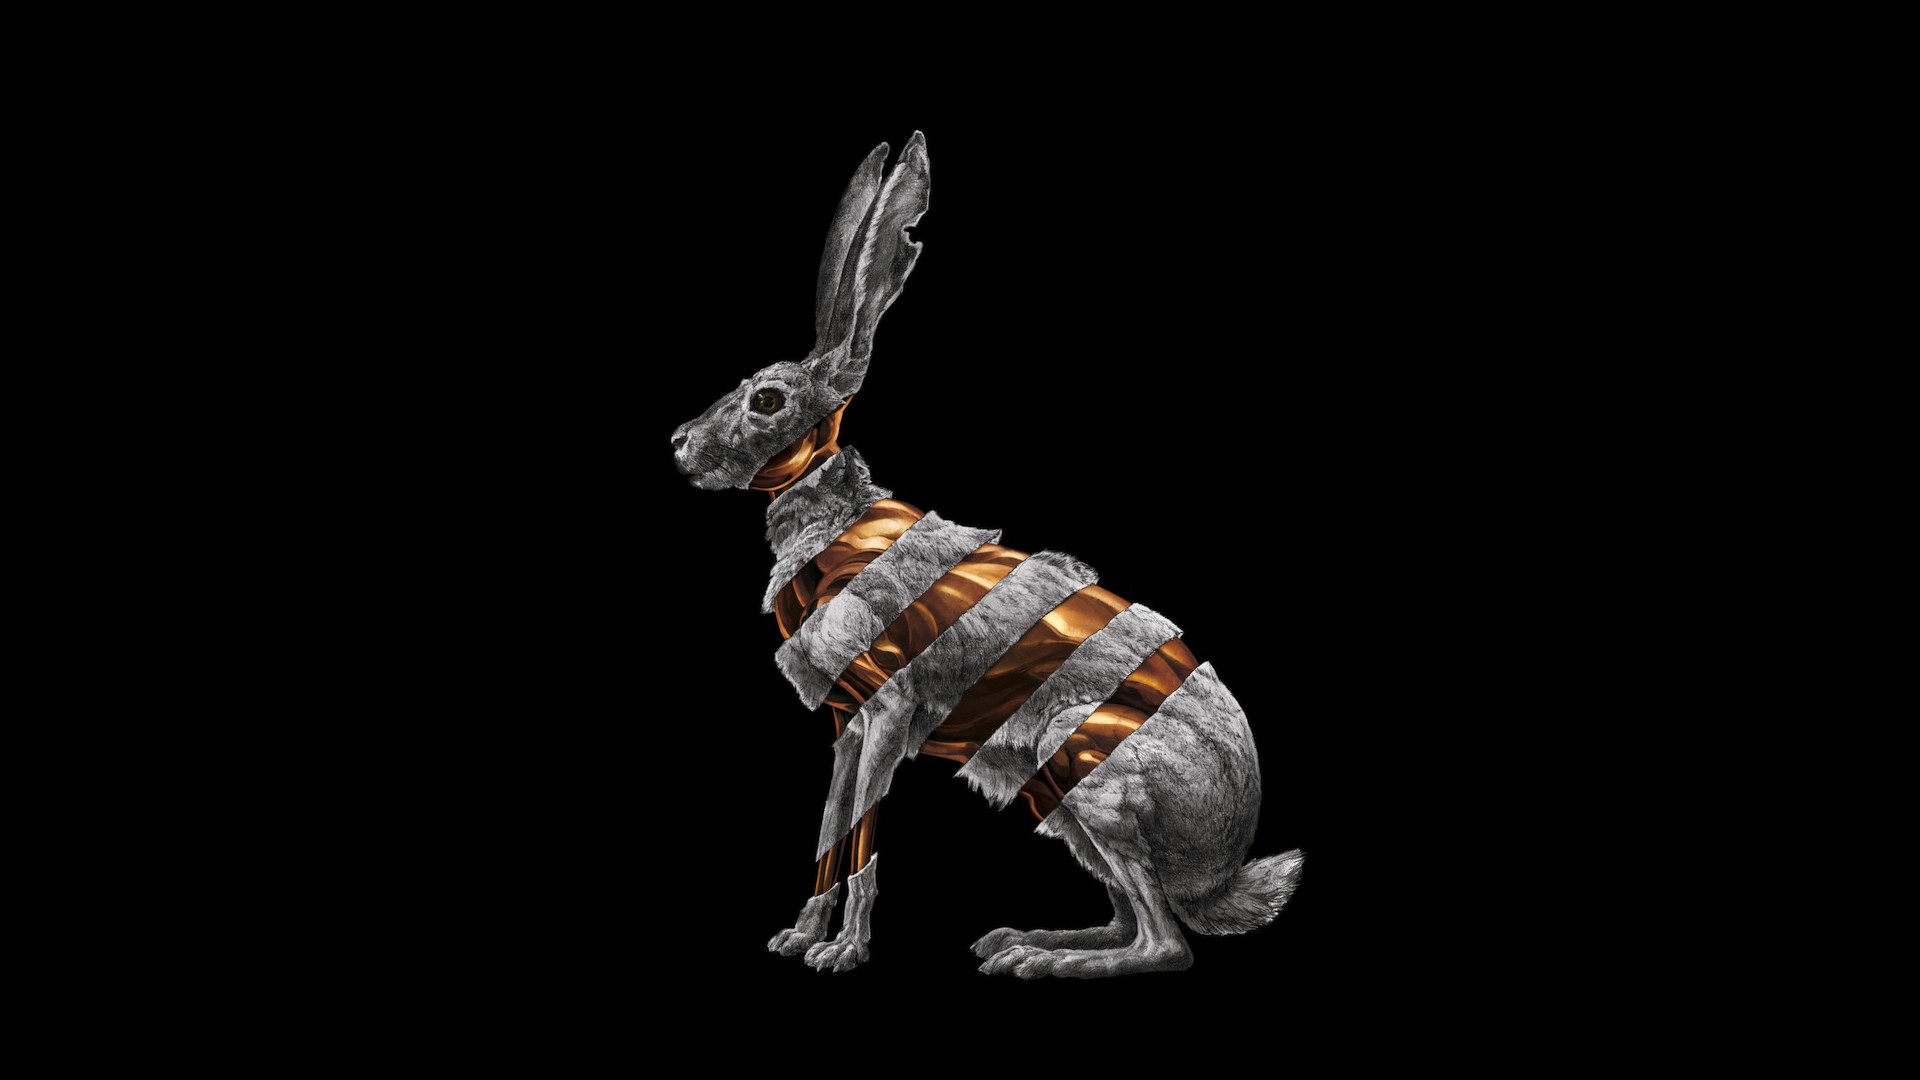 General 1920x1080 rabbits album covers simple background black background digital art animals mammals music